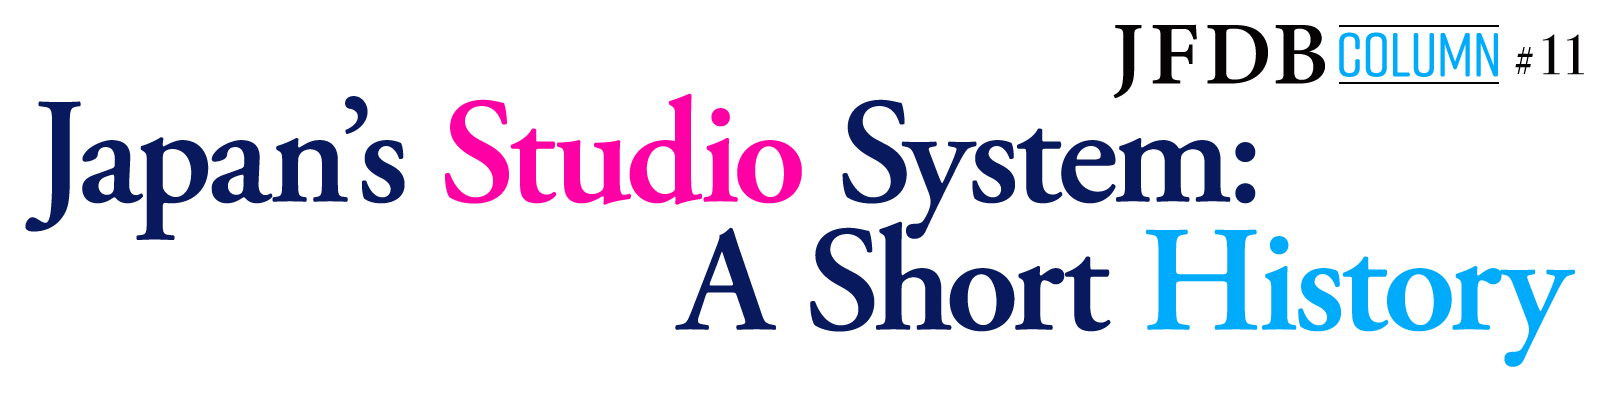 Japan’s Studio System: A Short History - JFDB Column #11